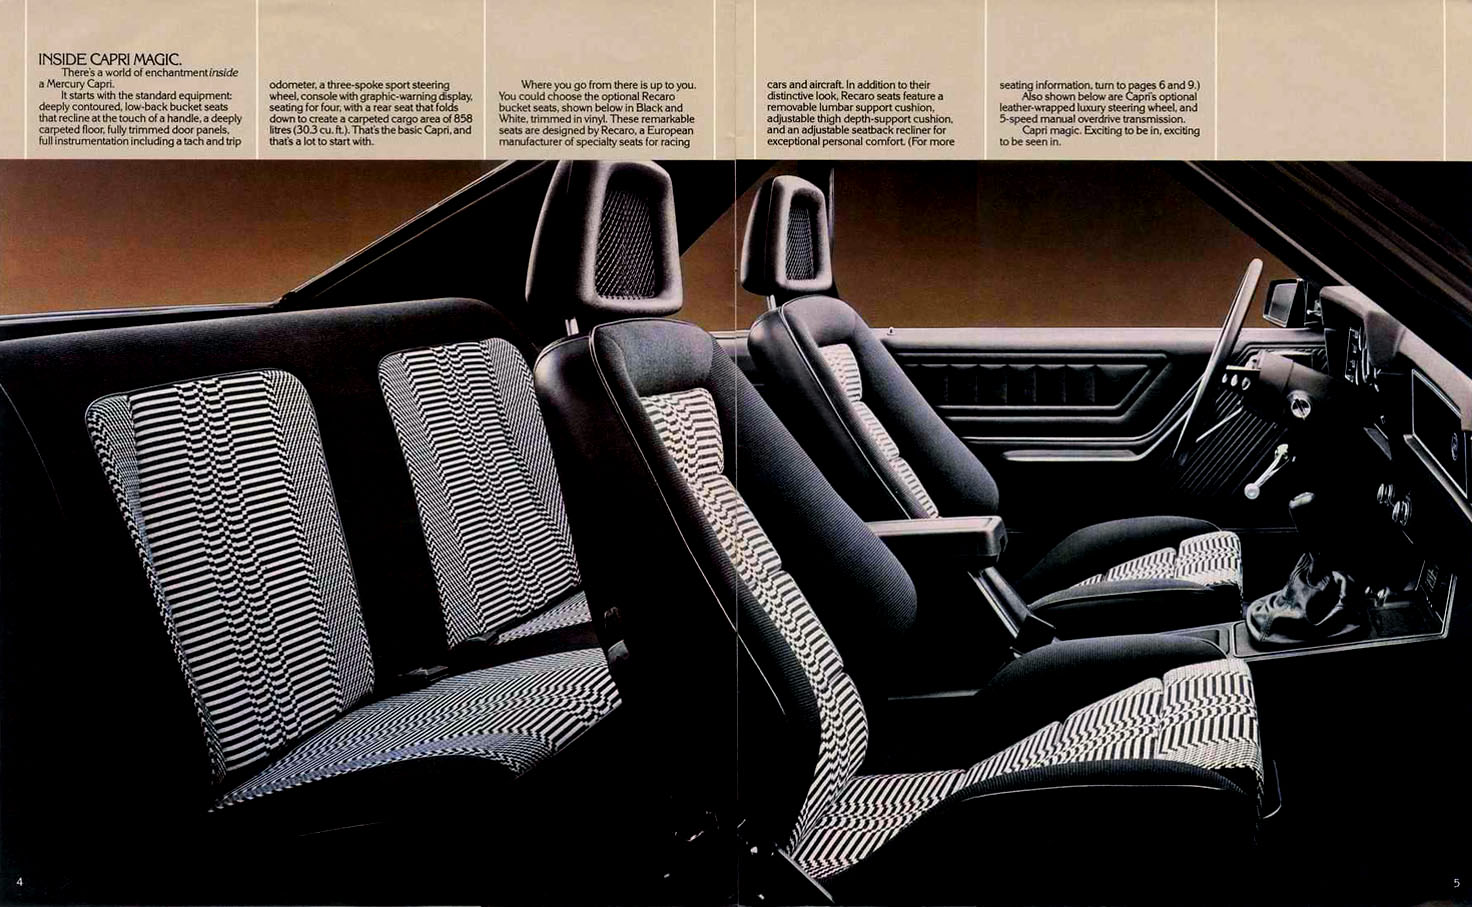 1982 Mercury Capri Canadian Brochure Page 8